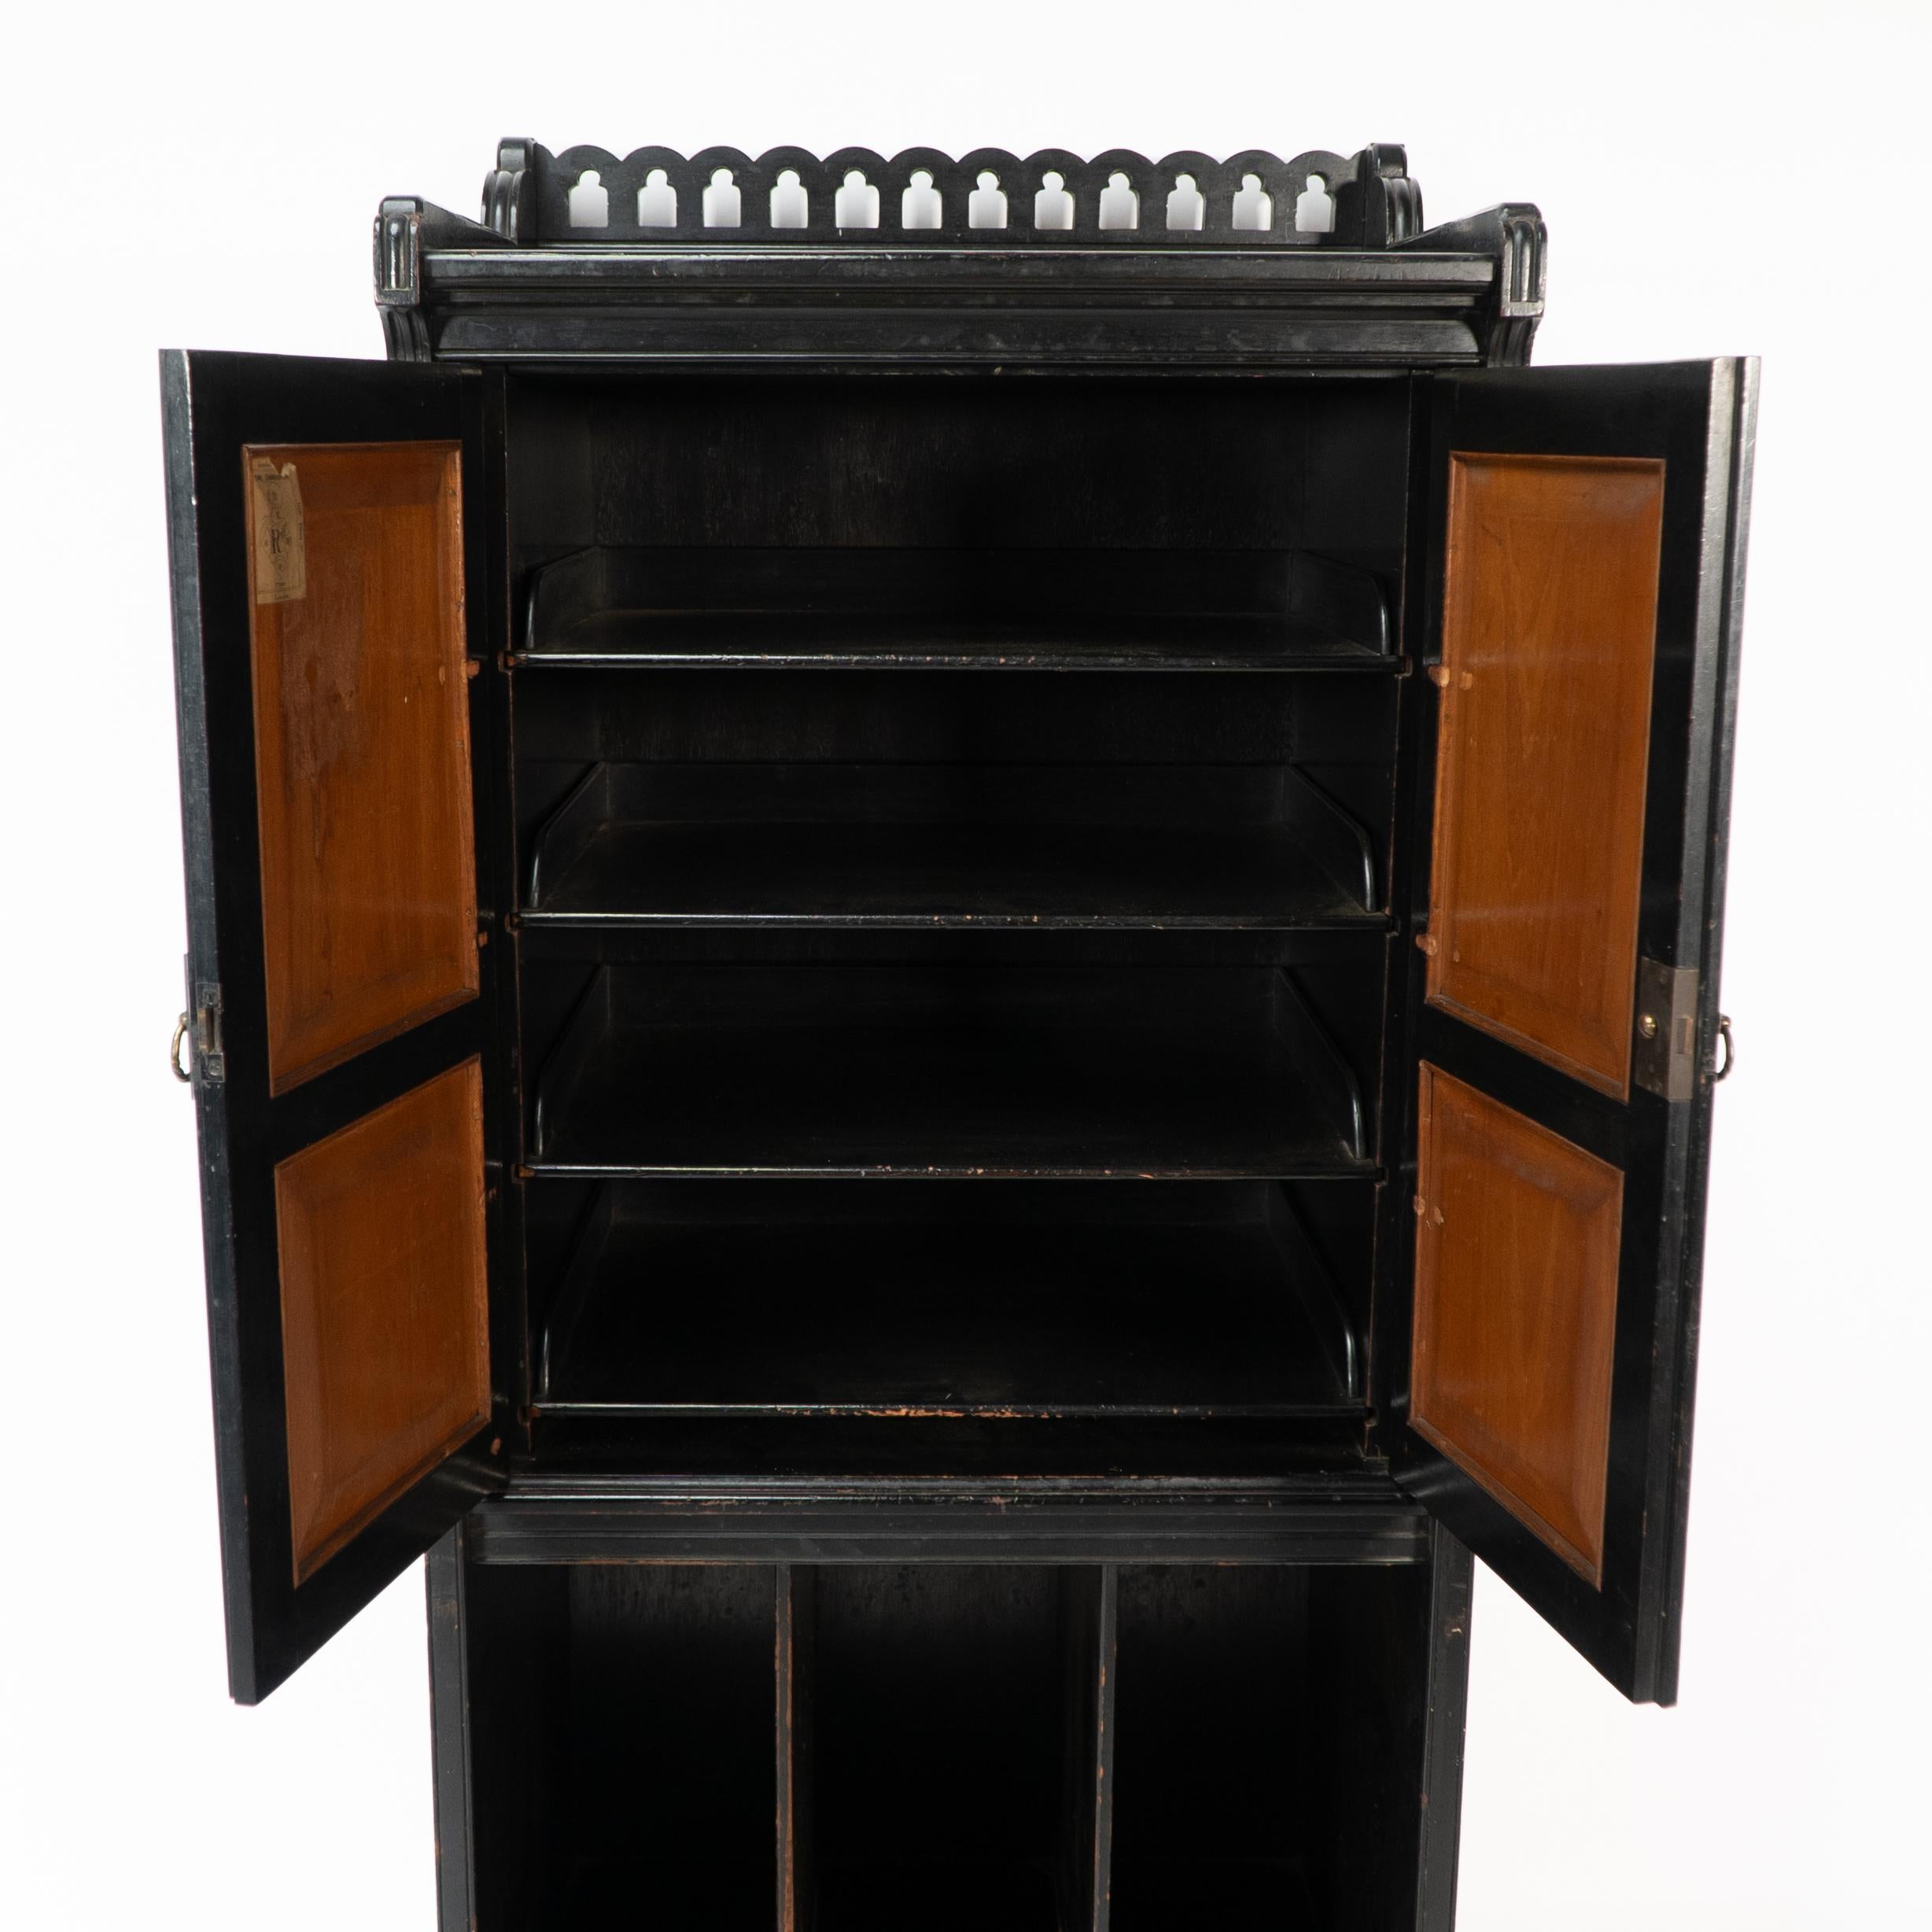 Collinson & Walton. An Aesthetic Movement burr walnut & ebonized music cabinet For Sale 3